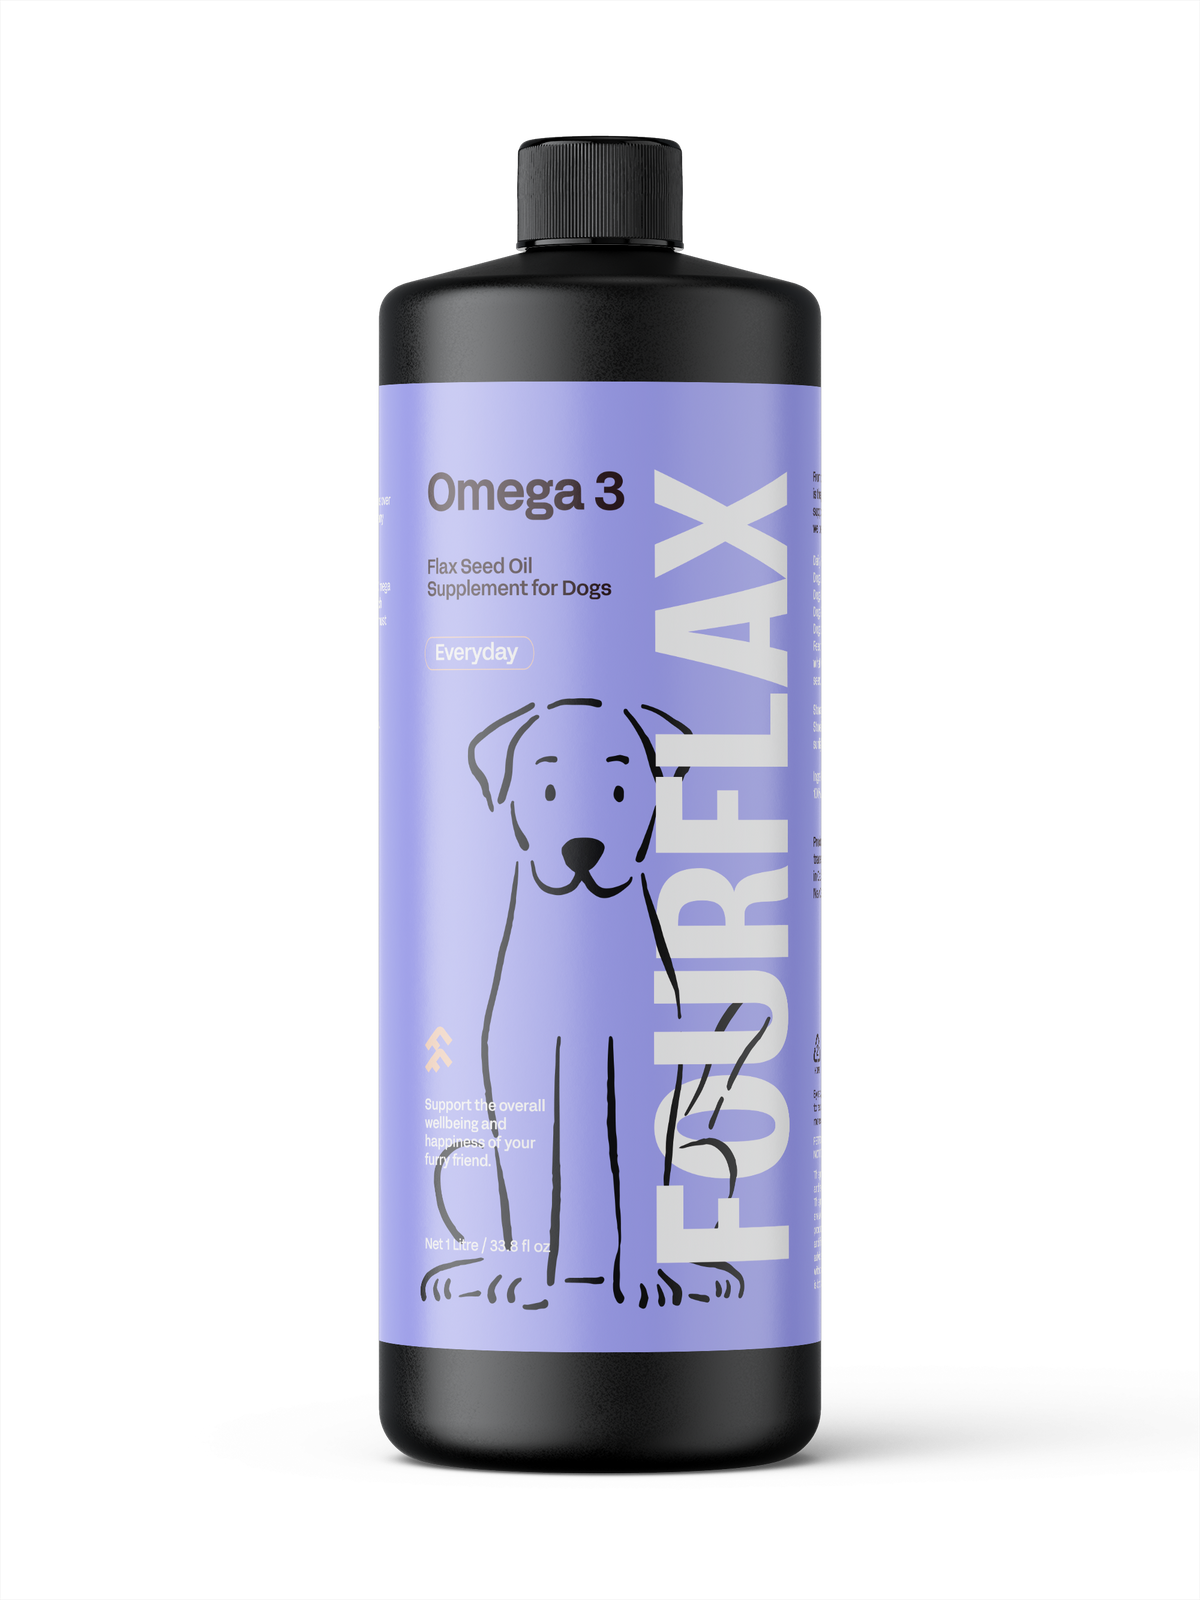 Fourflax Canine Flax Seed Oil